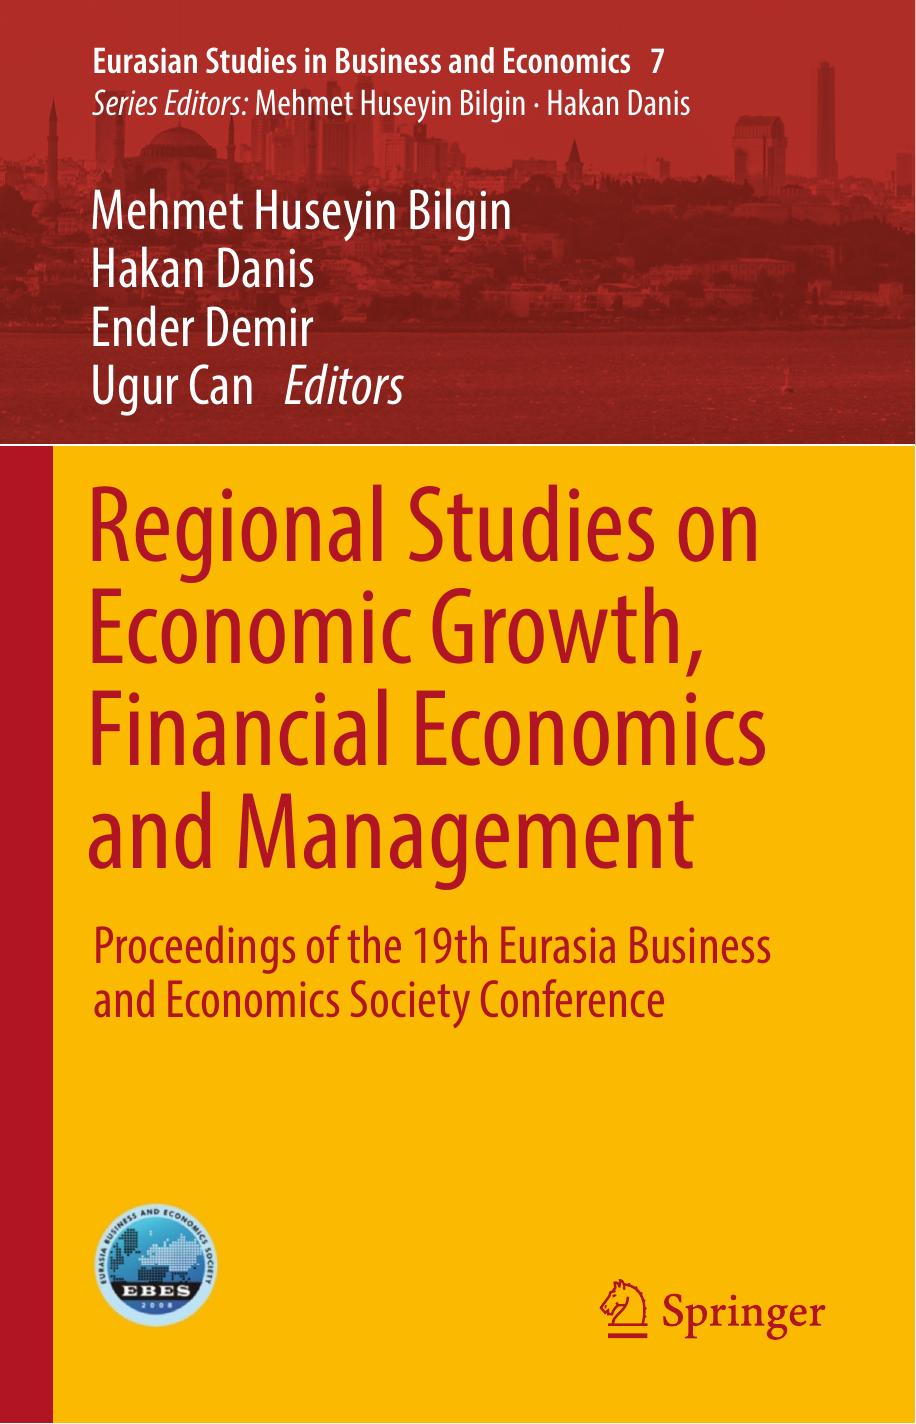 Regional Studies on Economic Growth, Financial Economics and Management 2017